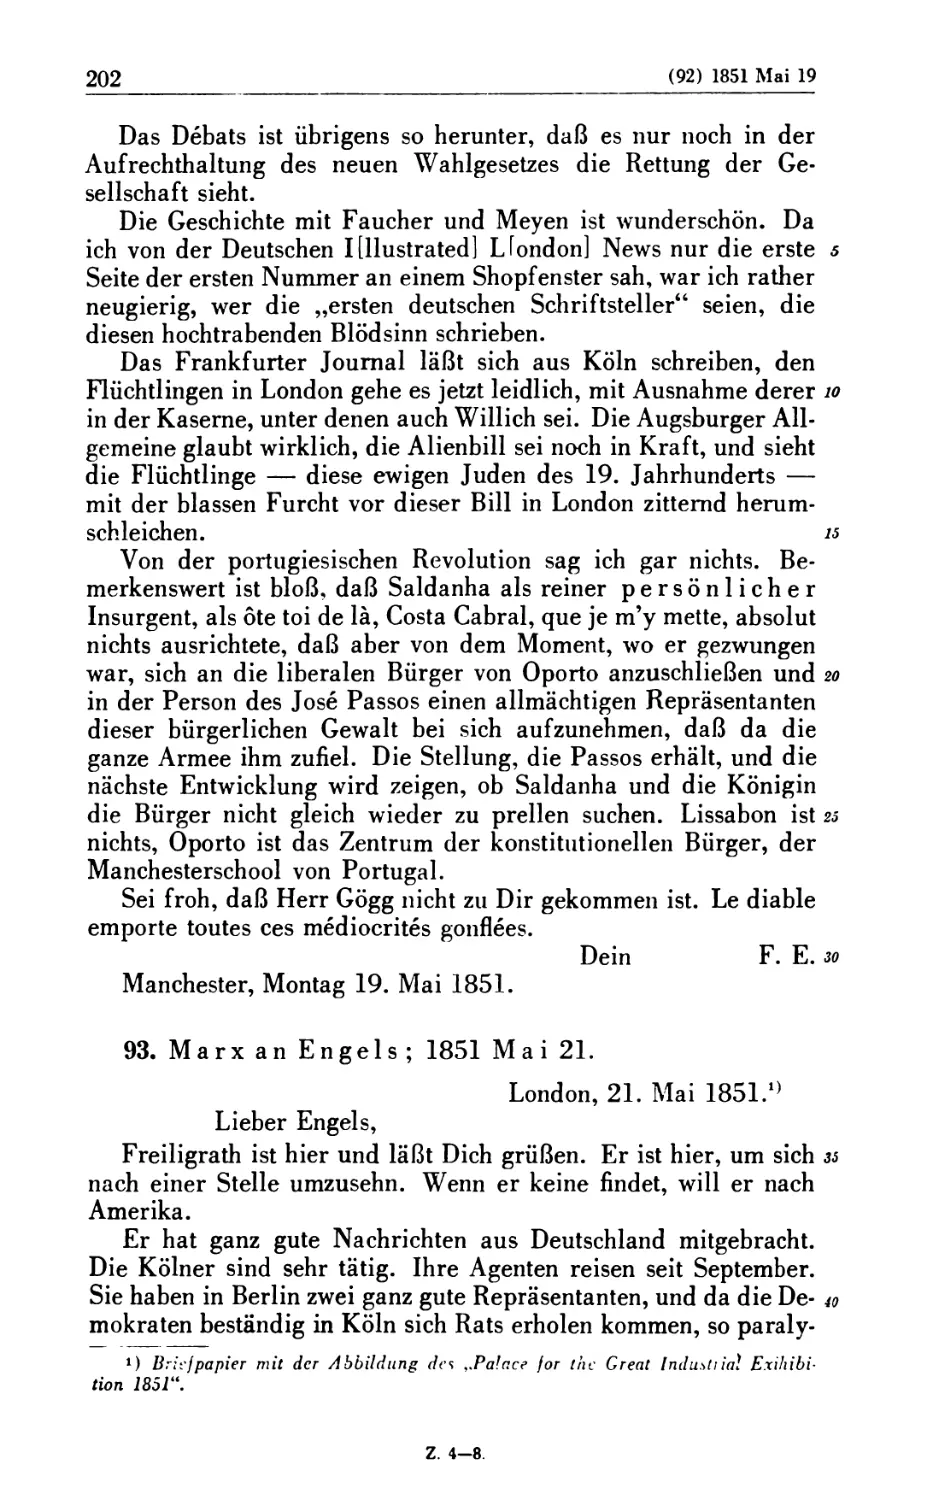 93. Marx an Engels; 1851 Mai 21